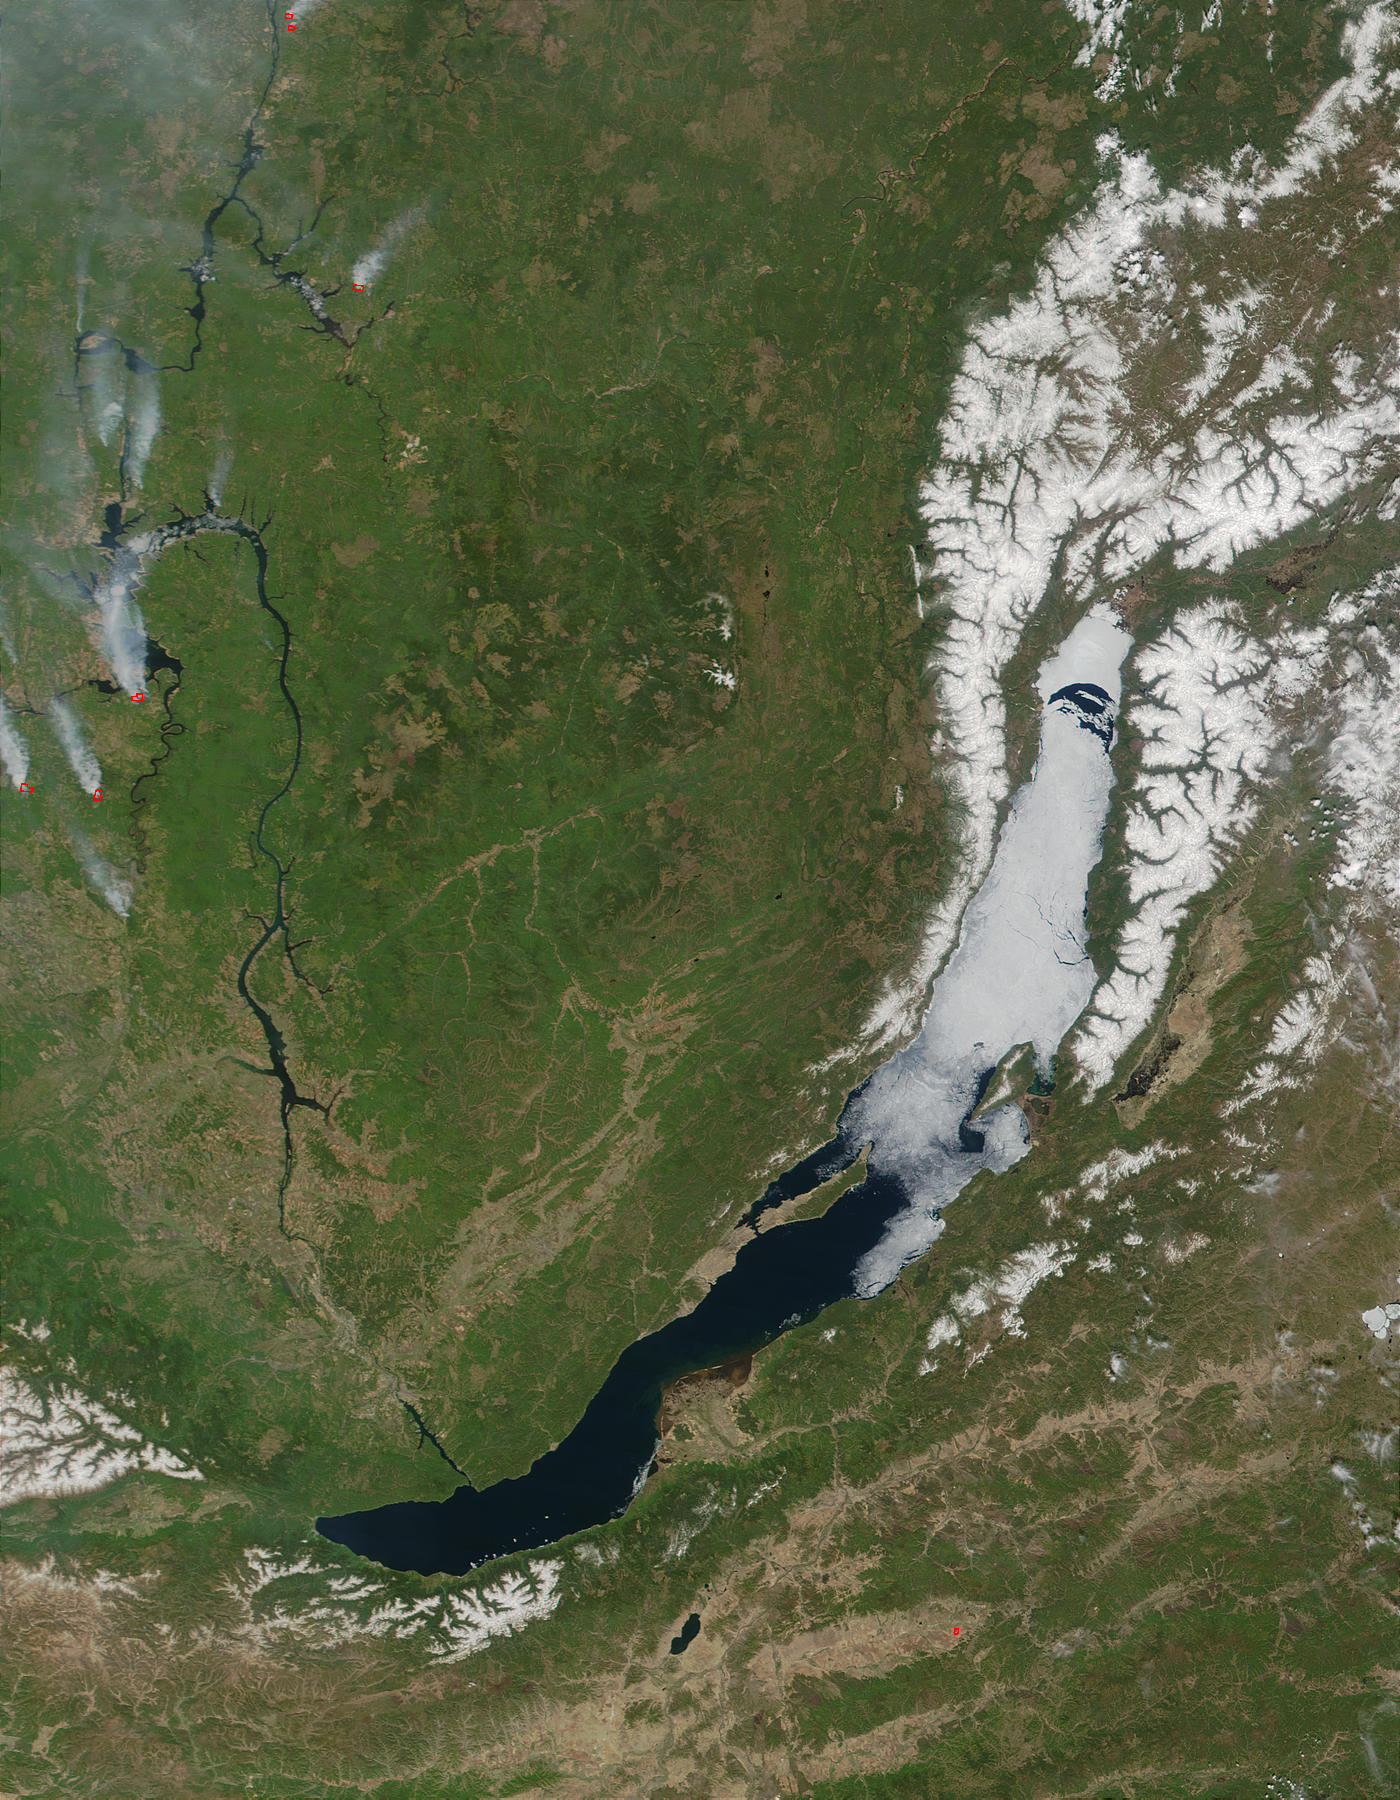 Озеро Байкал вид сверху